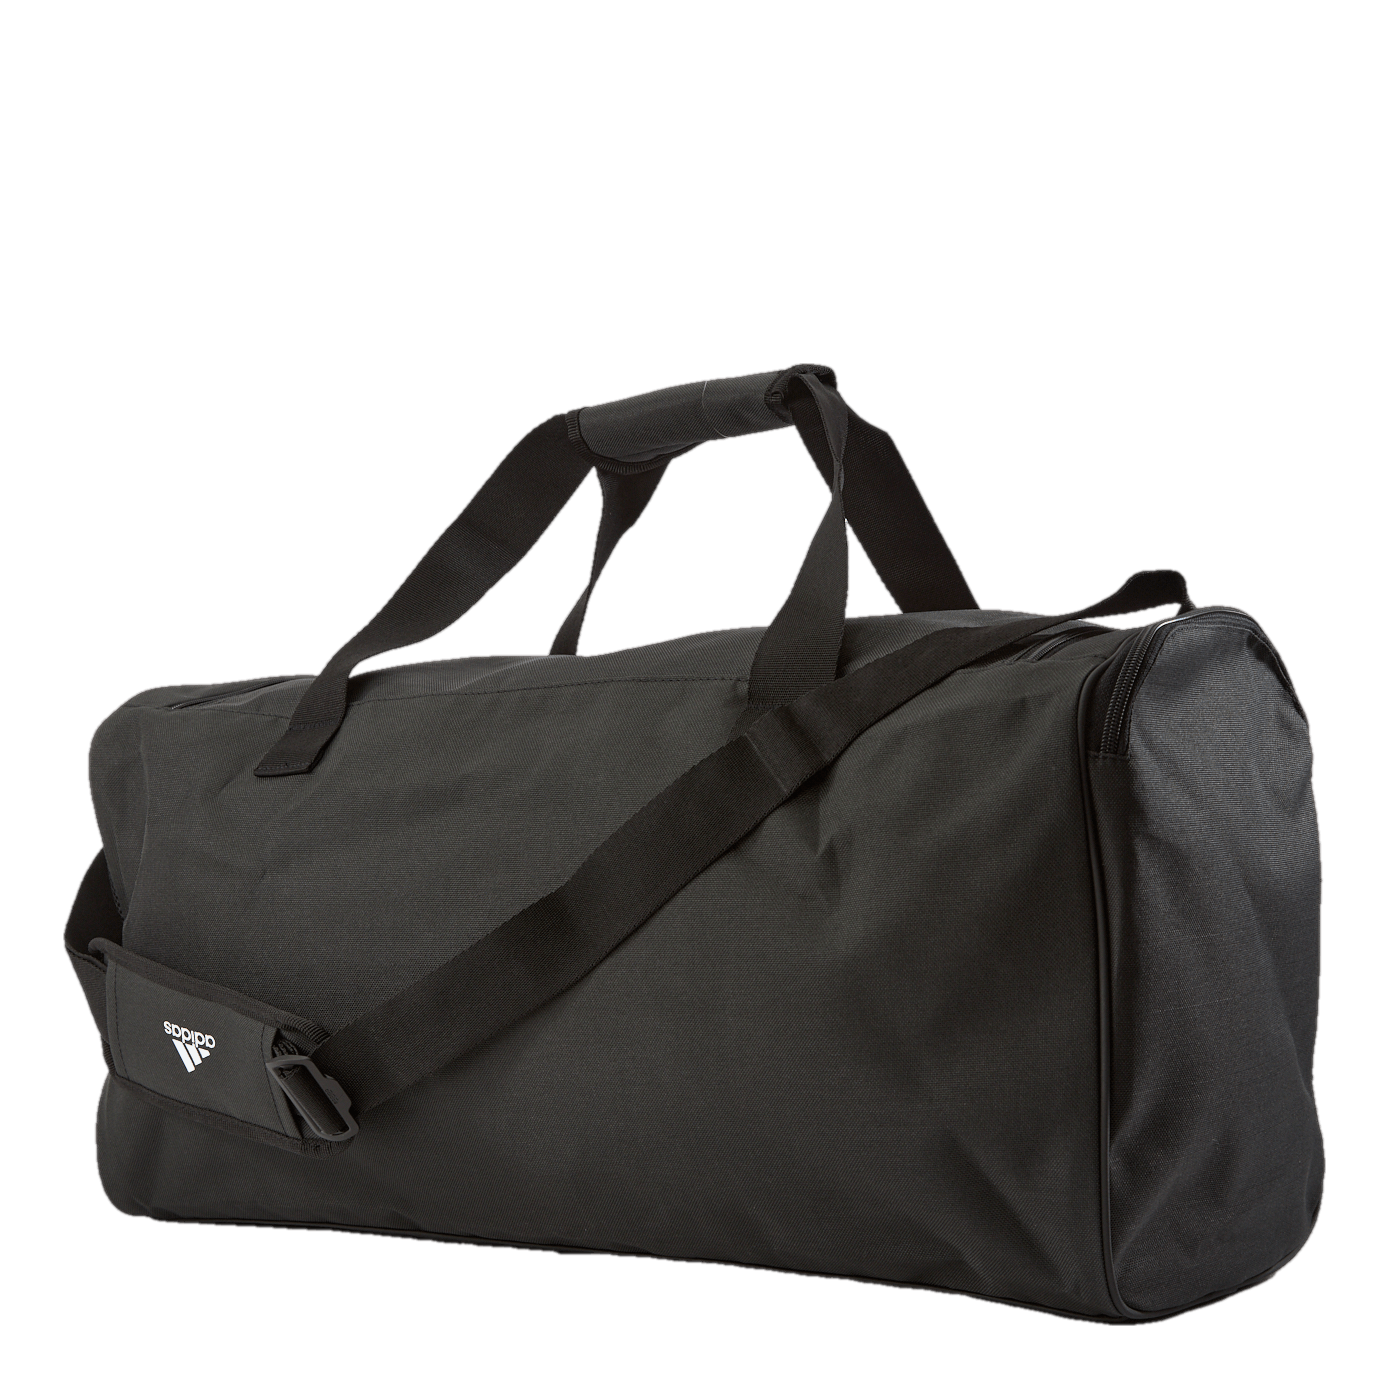 Essentials Linear Duffel Bag Medium Black / White